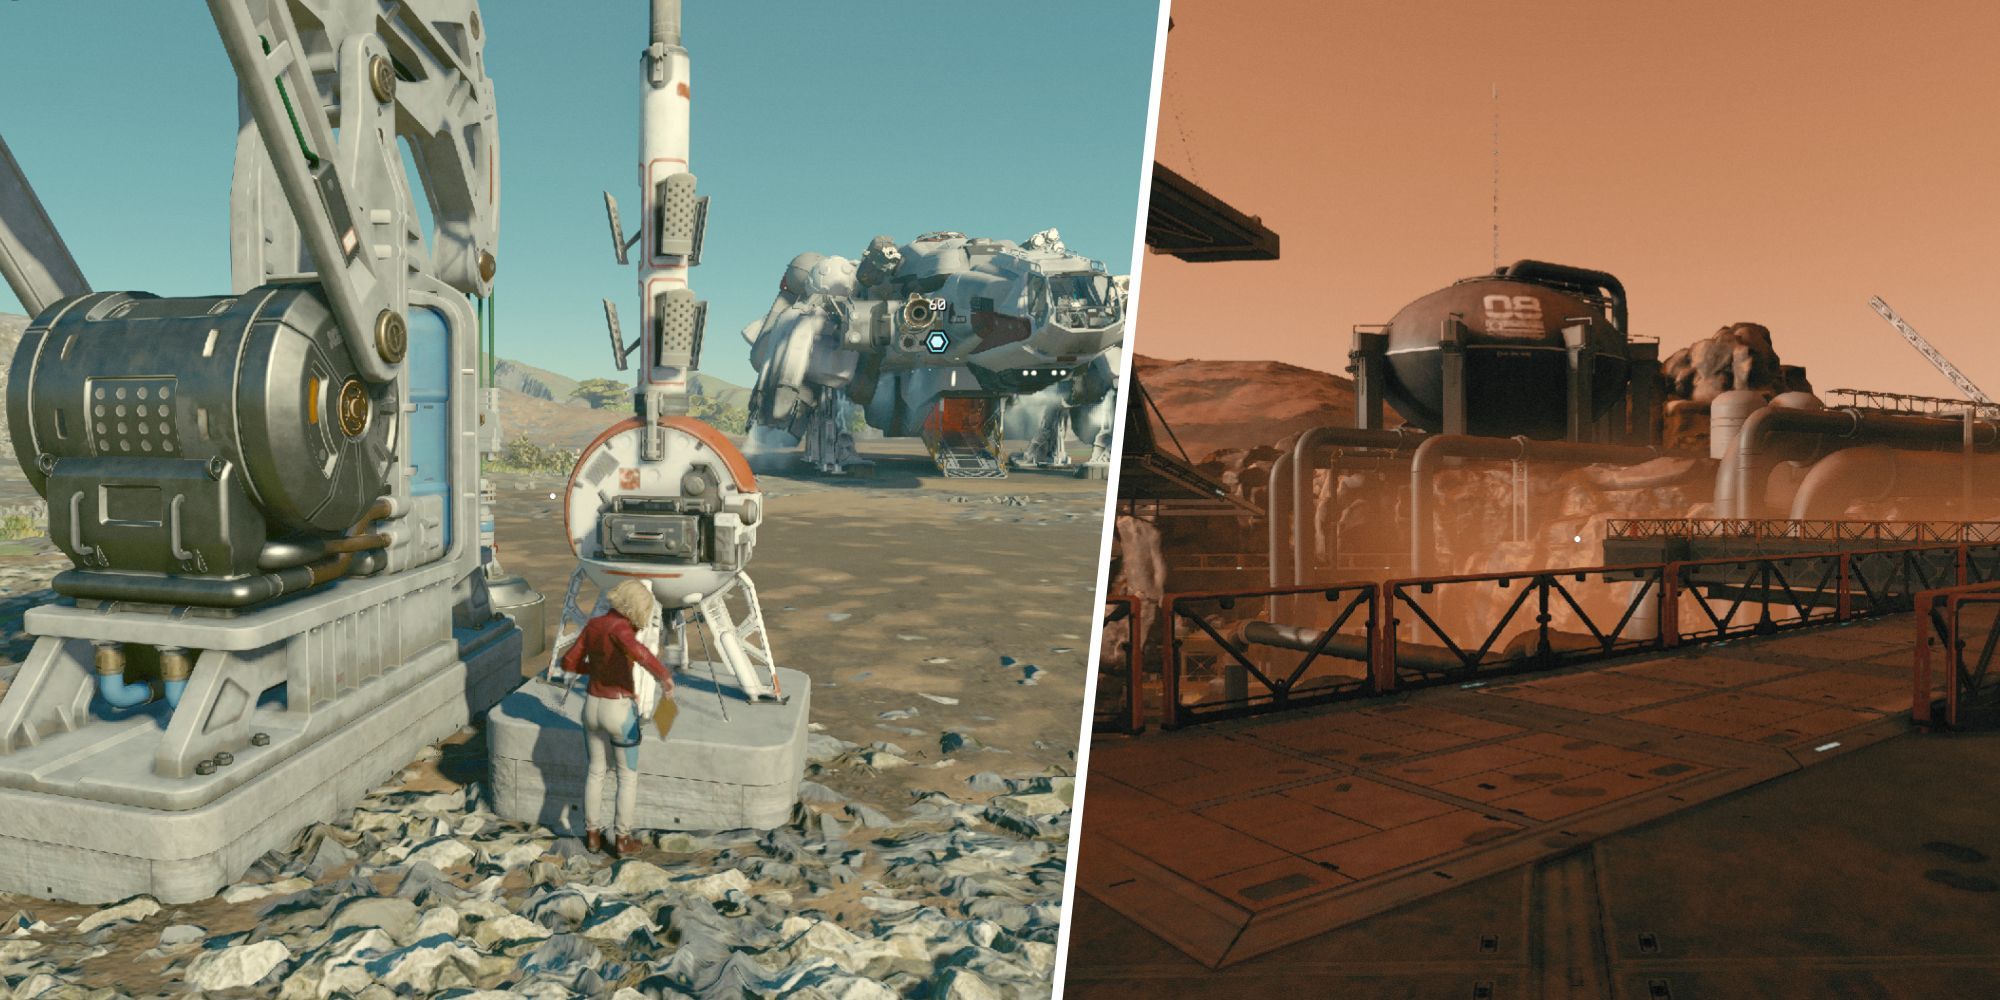 Starfield - Split Image, Extractor Outpost on Jemison, Mining Outpost on Mars